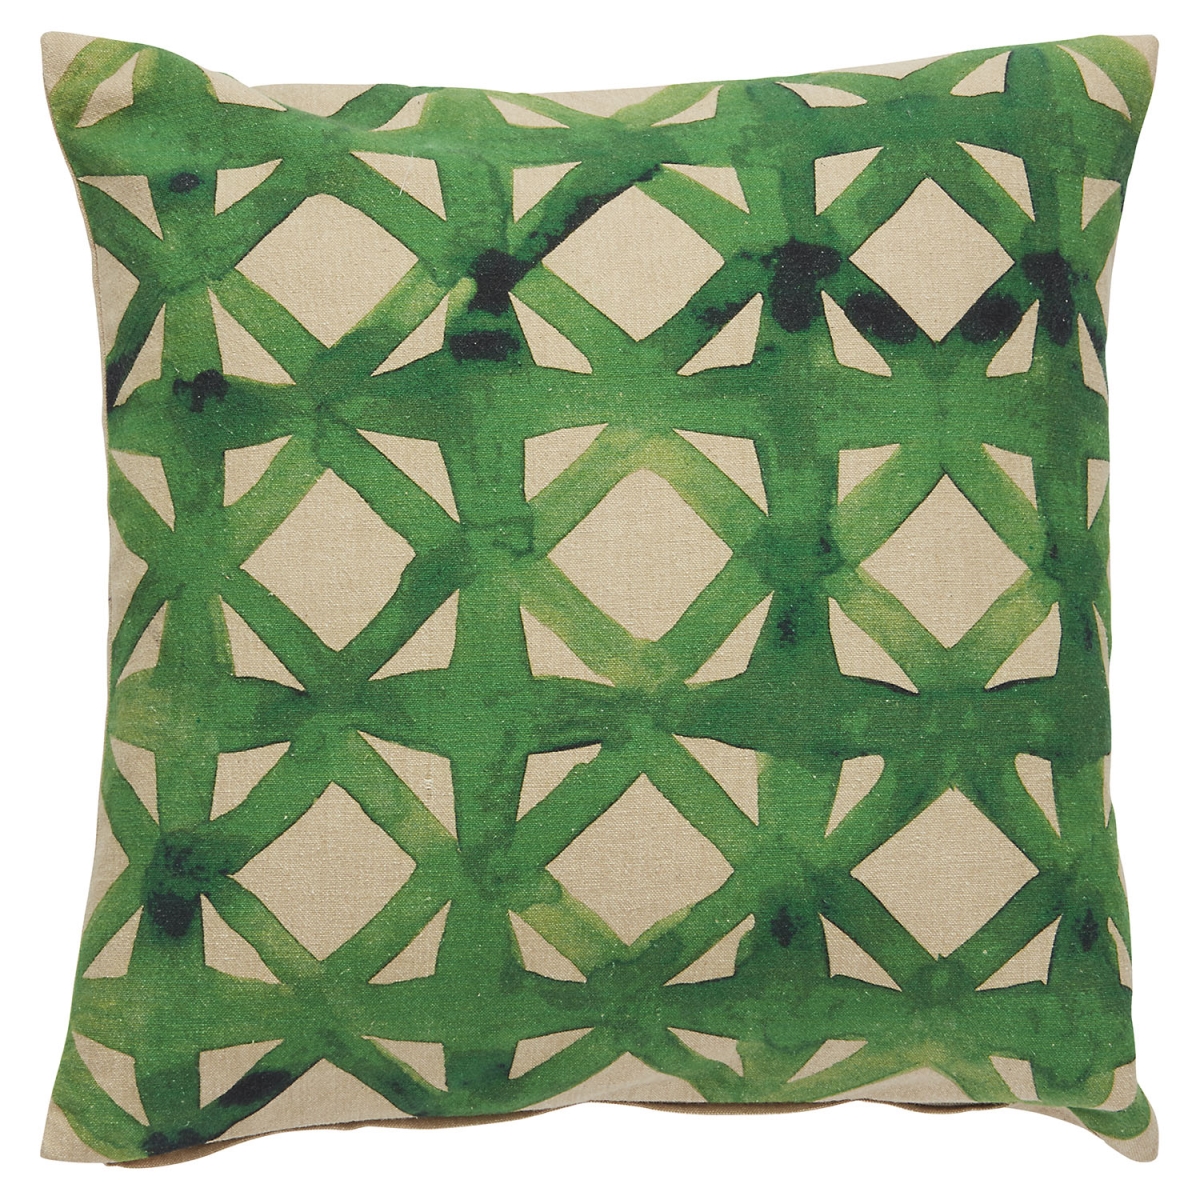 Plw102808 18 X 18 In. Verdigris Emerald Green & Beige Trellis Down Throw Pillow